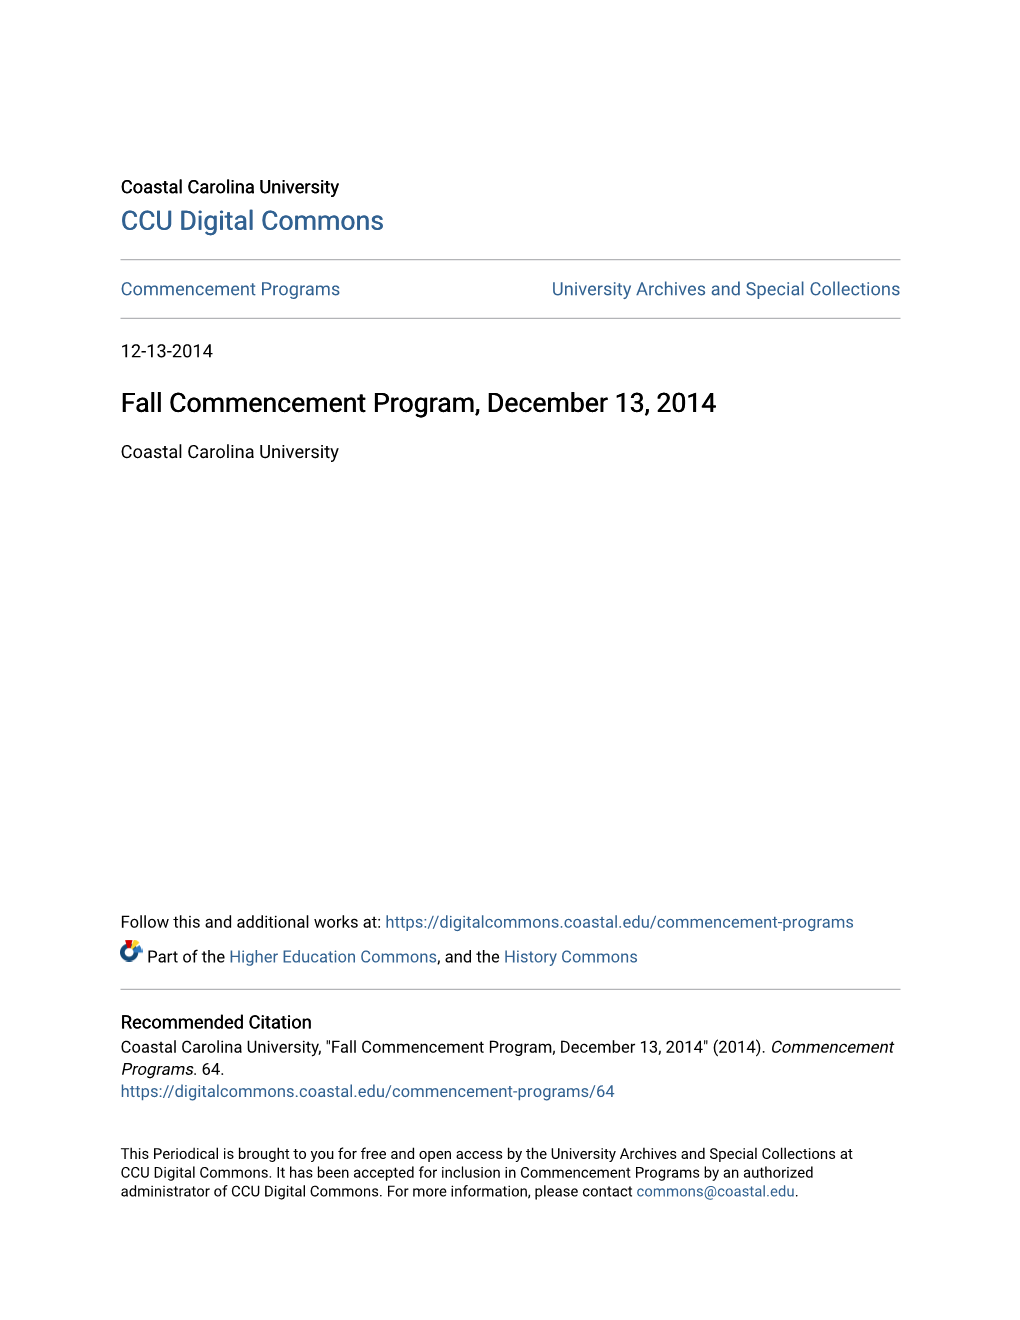 Fall Commencement Program, December 13, 2014